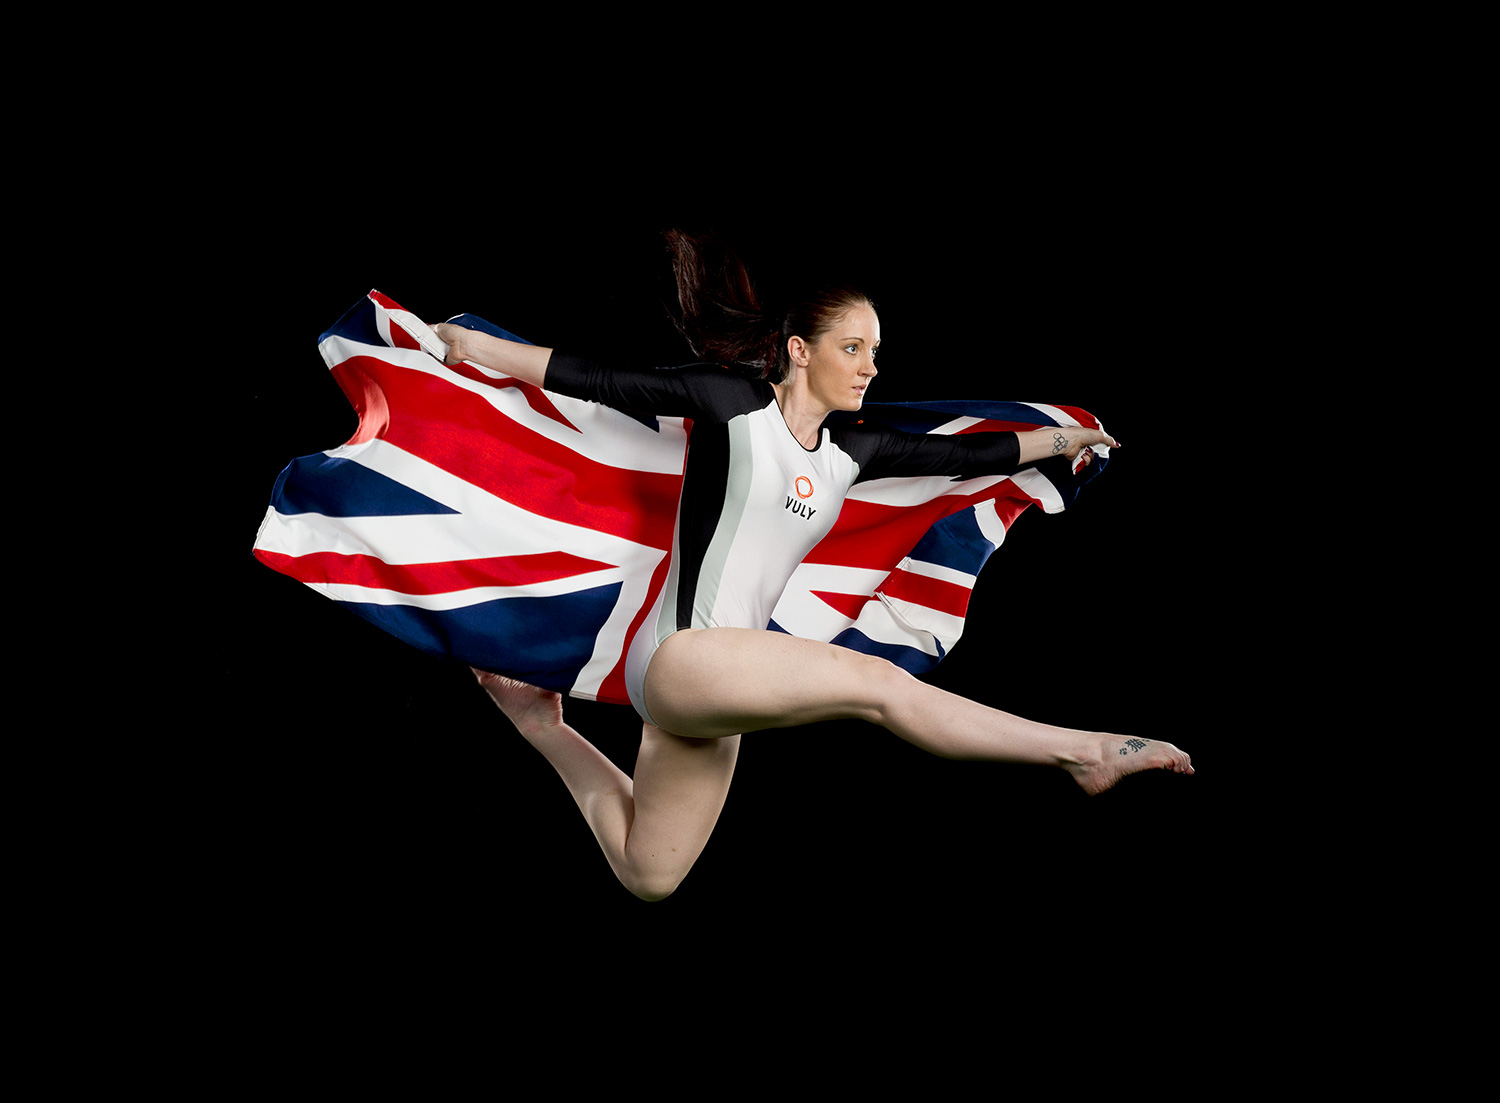 Meet our athlete - Kat Driscoll (UK)